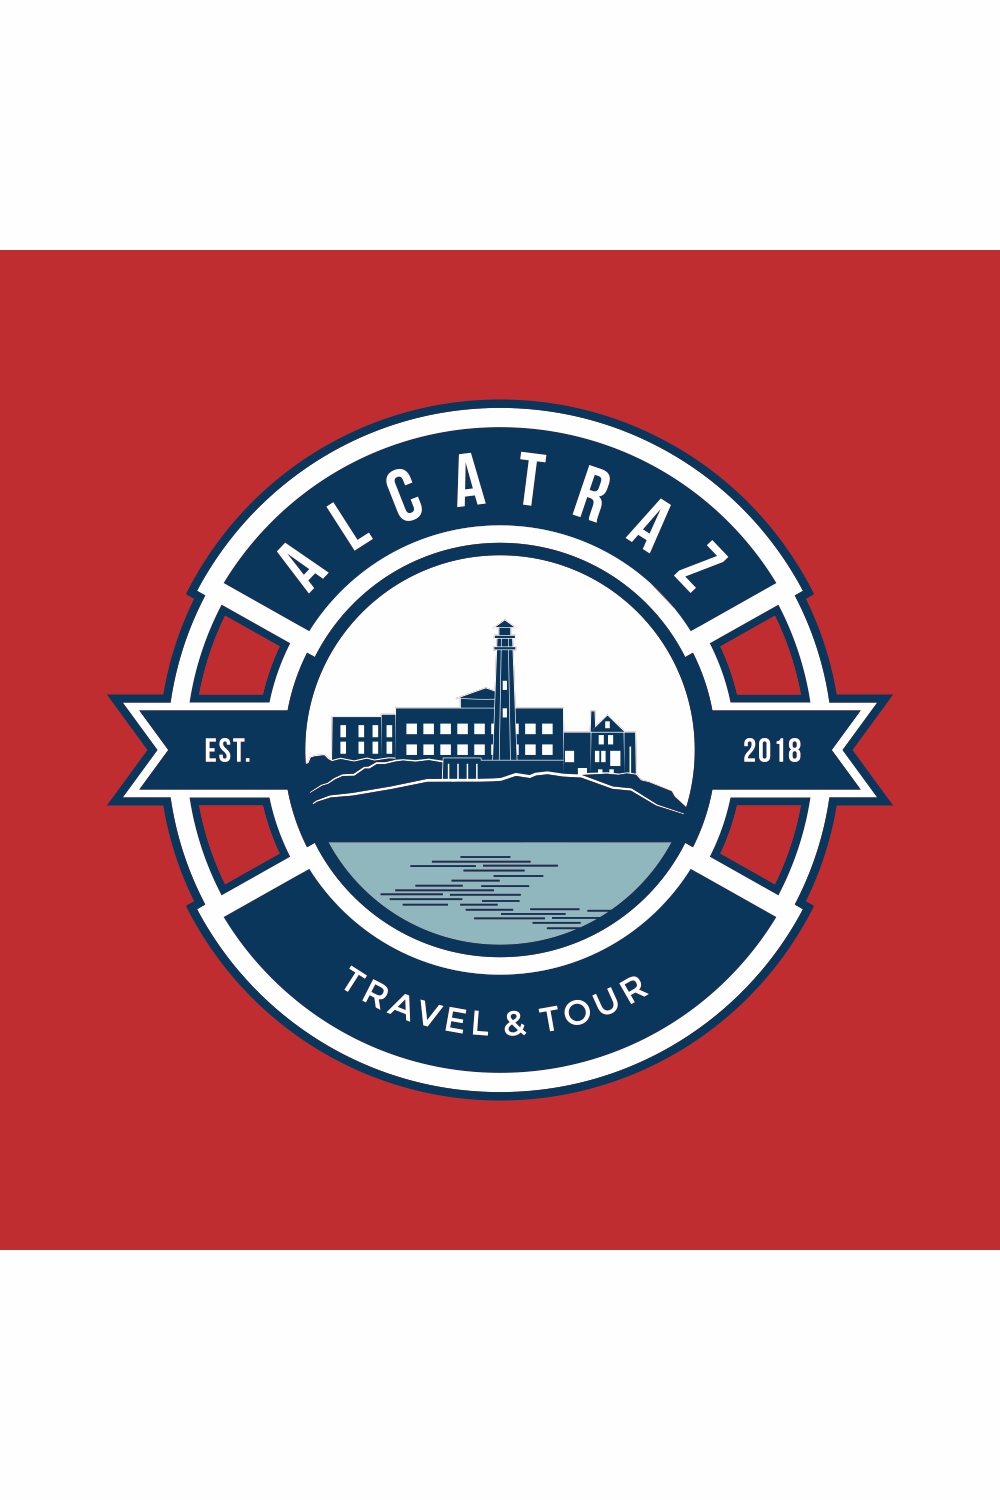 Alcatraz prison tour logo design template - only 8$ pinterest preview image.